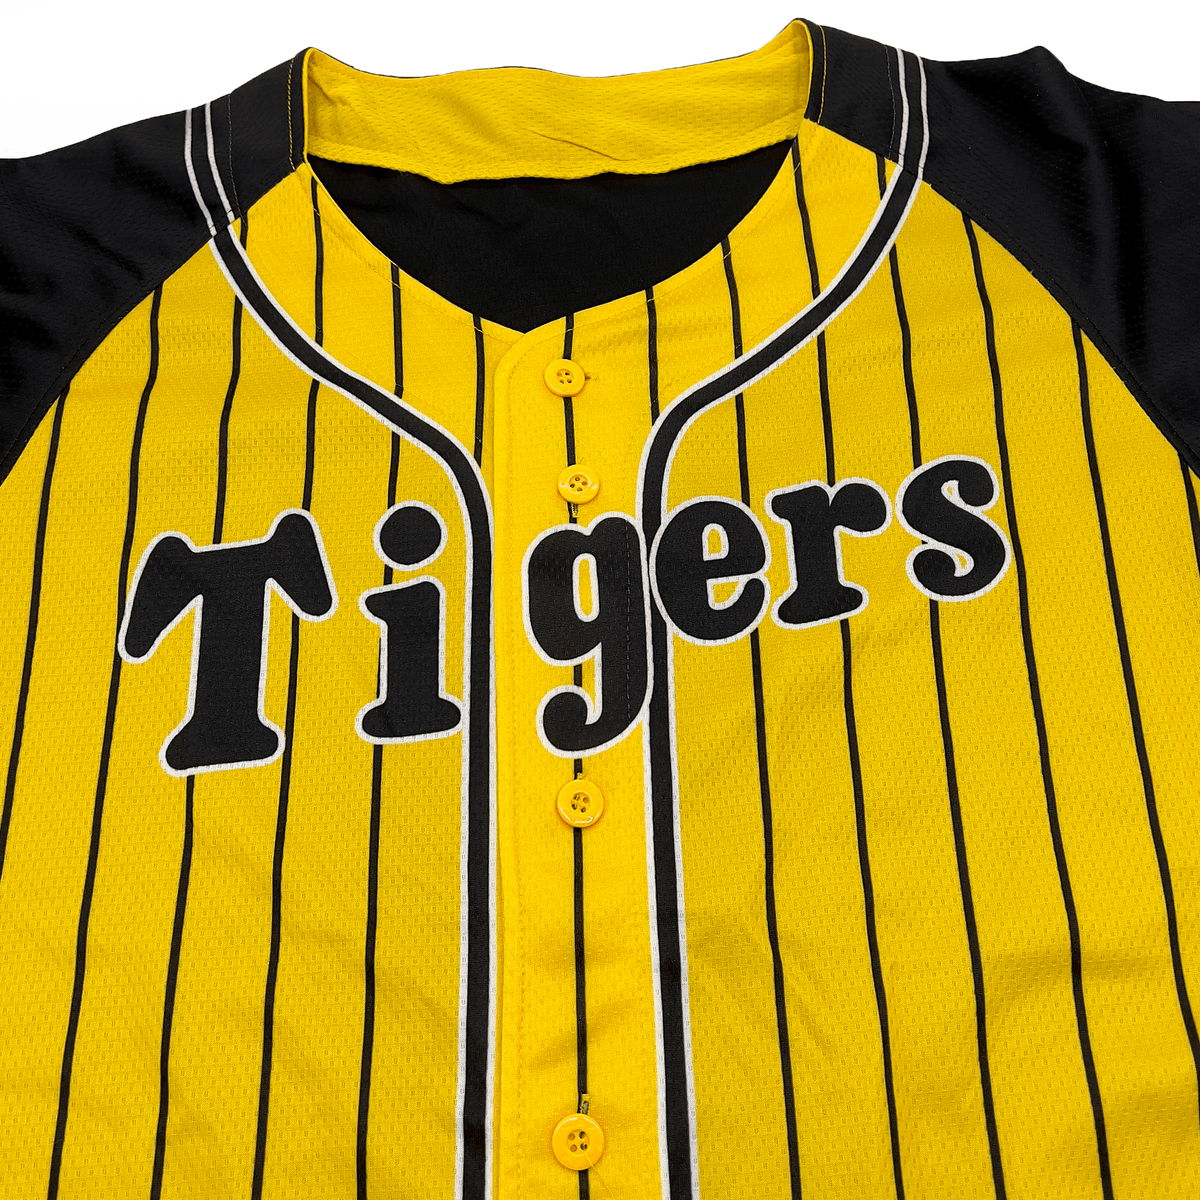 tigers baseball jerseys